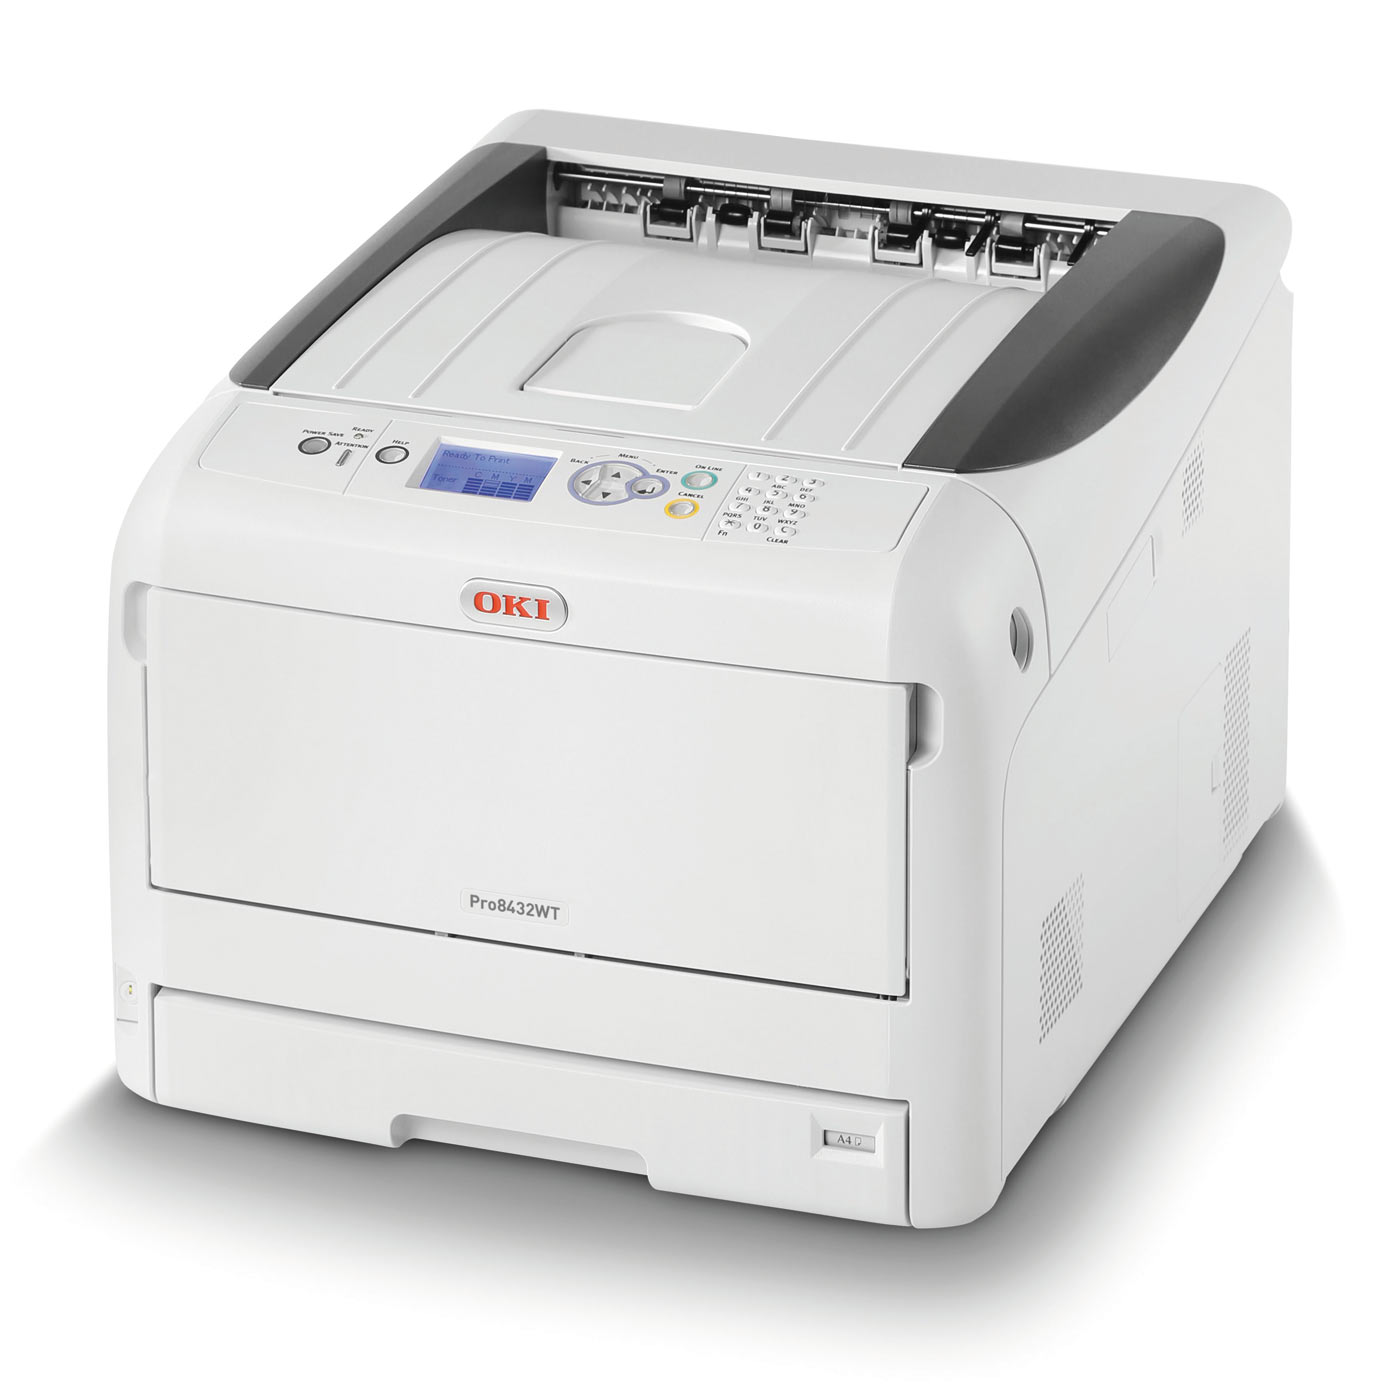 Принтер OKI Pro8432WT 